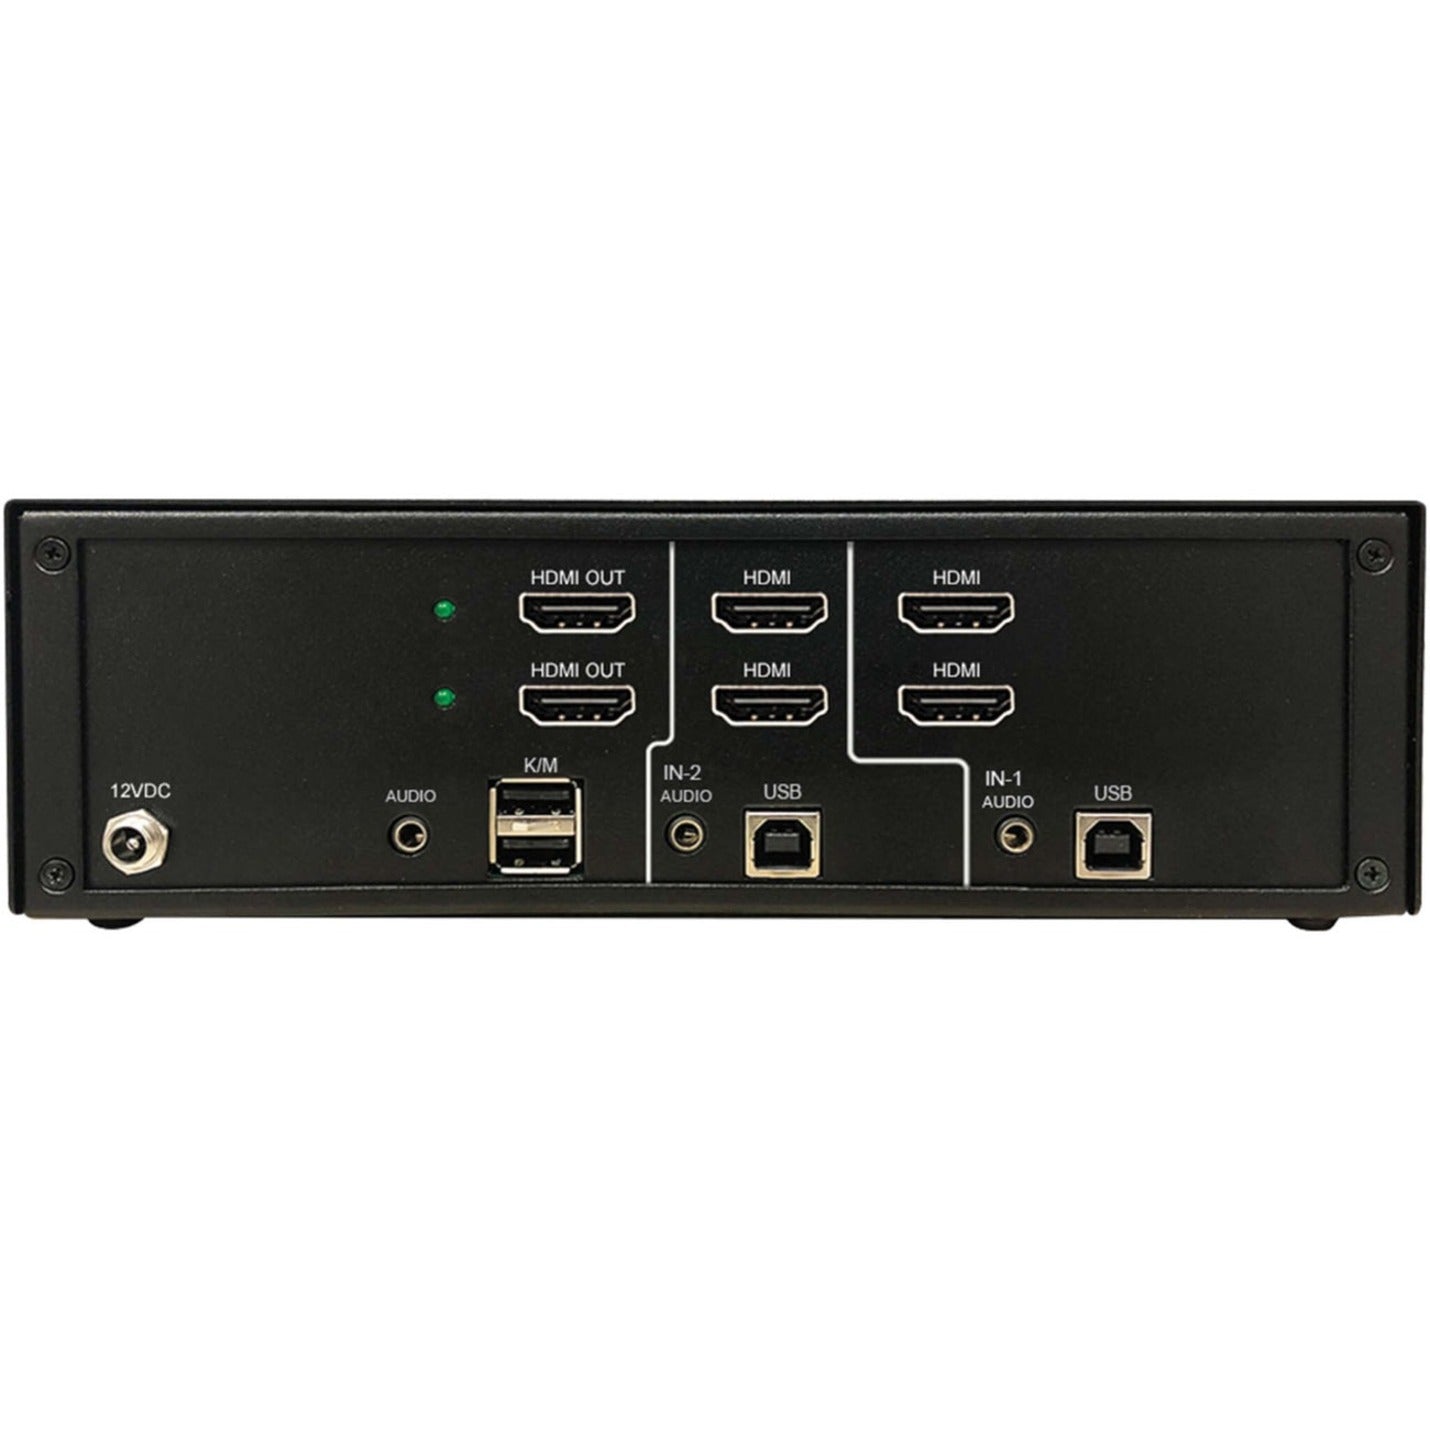 Tripp Lite B002-H2A2-N4 Secure KVM Switch, 2-Port, Dual Head, HDMI to HDMI, 4K, NIAP PP4.0, Audio, TAA, USB, HDMI, 4 USB Ports, 6 HDMI Ports